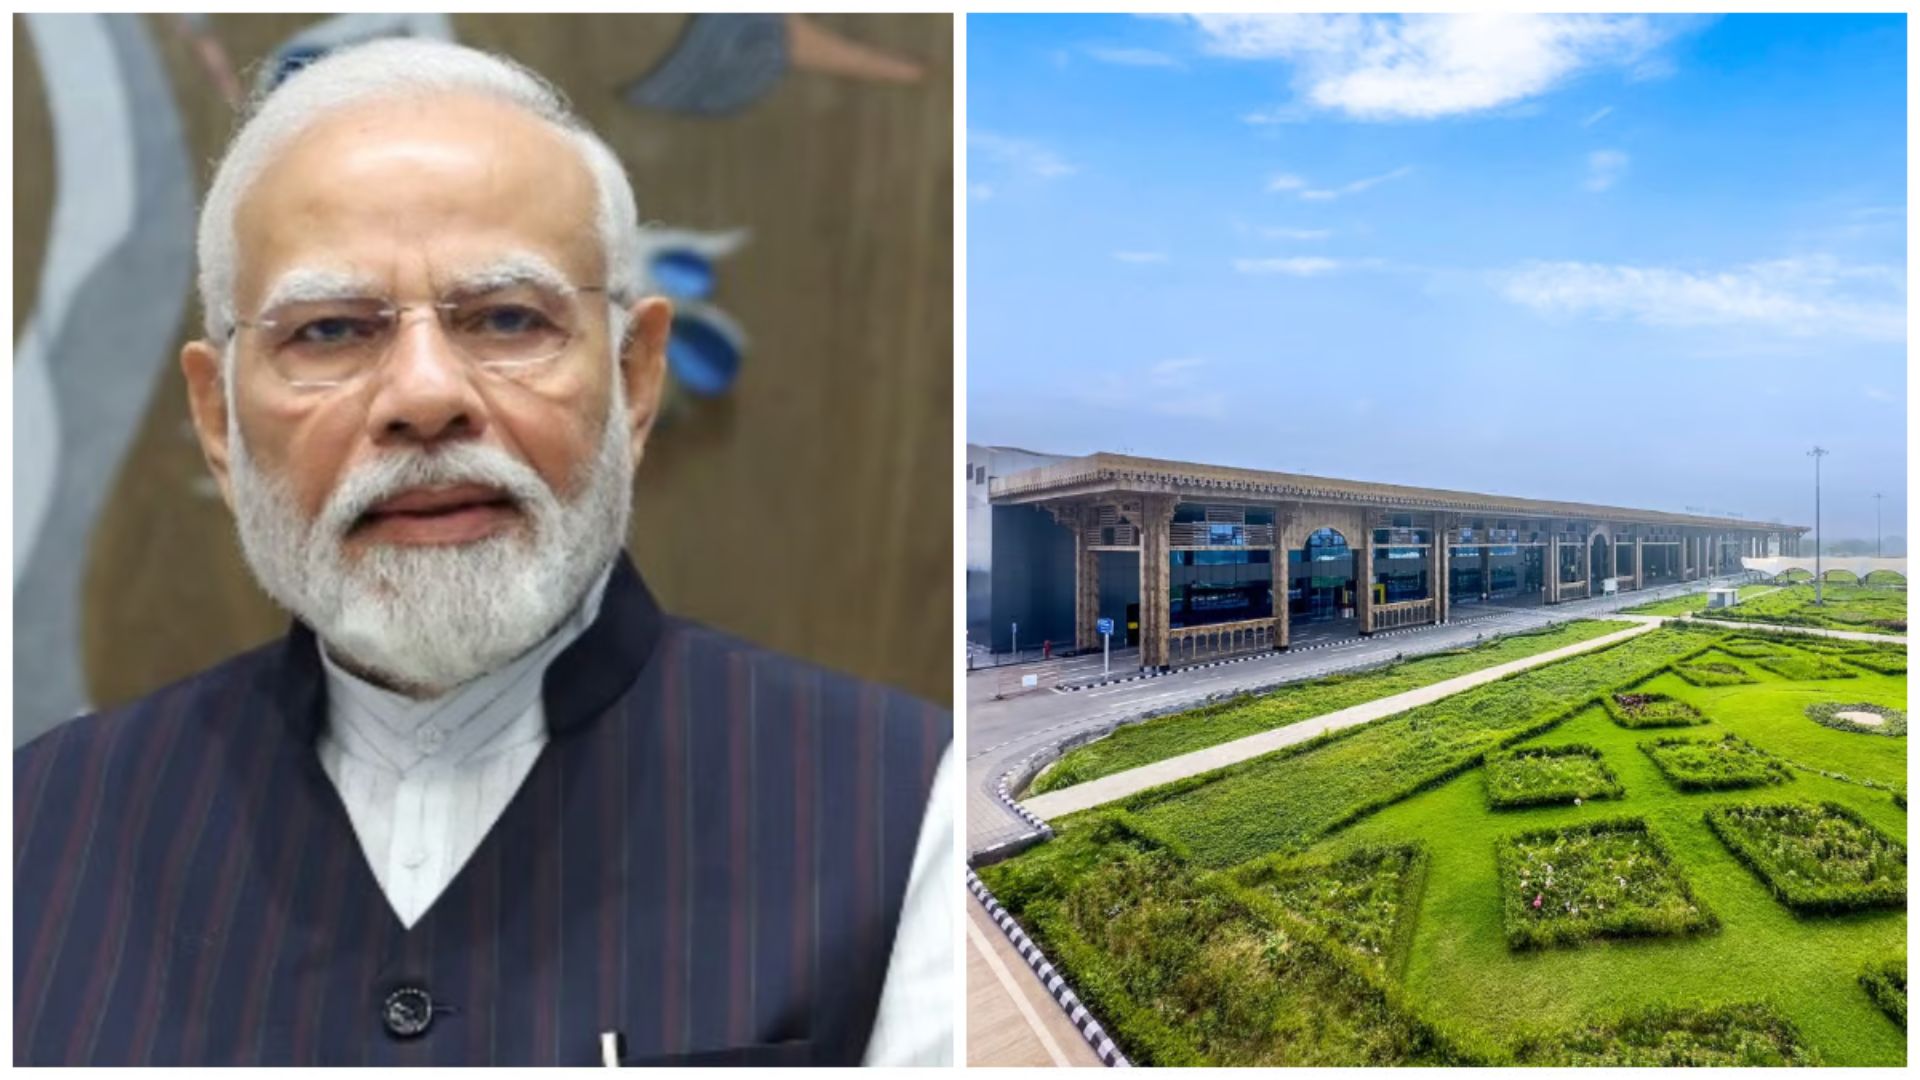 PM Modi to inaugurate Surat Diamond Bourse, the new integrated terminal building at Surat airport